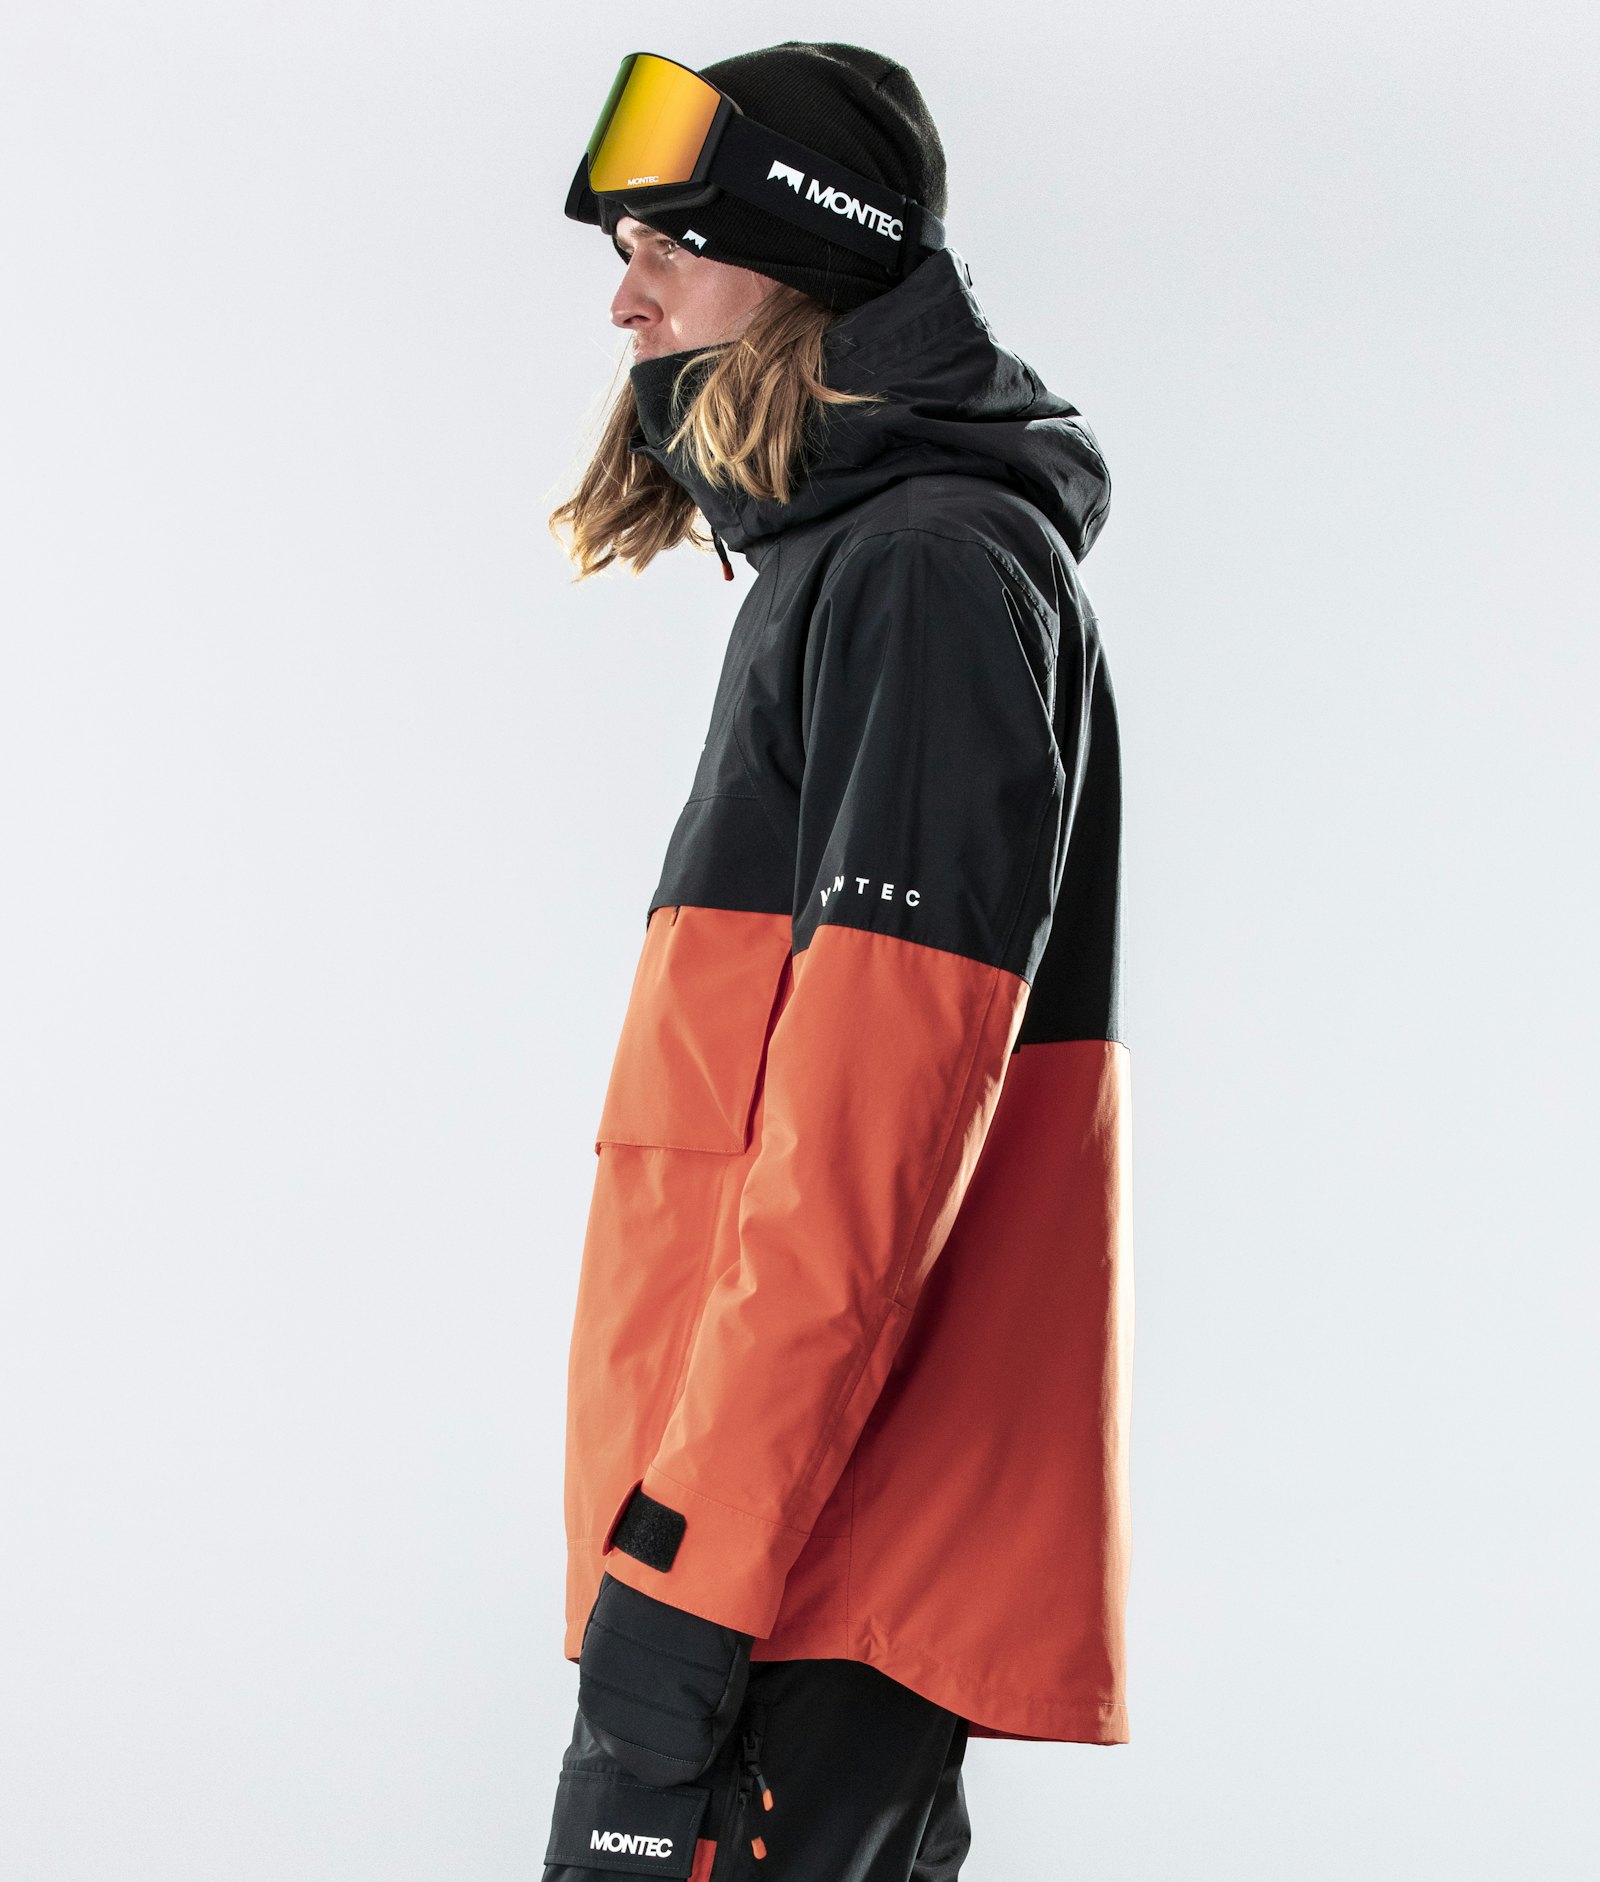 Dune 2020 Snowboardjacka Herr Black/Orange